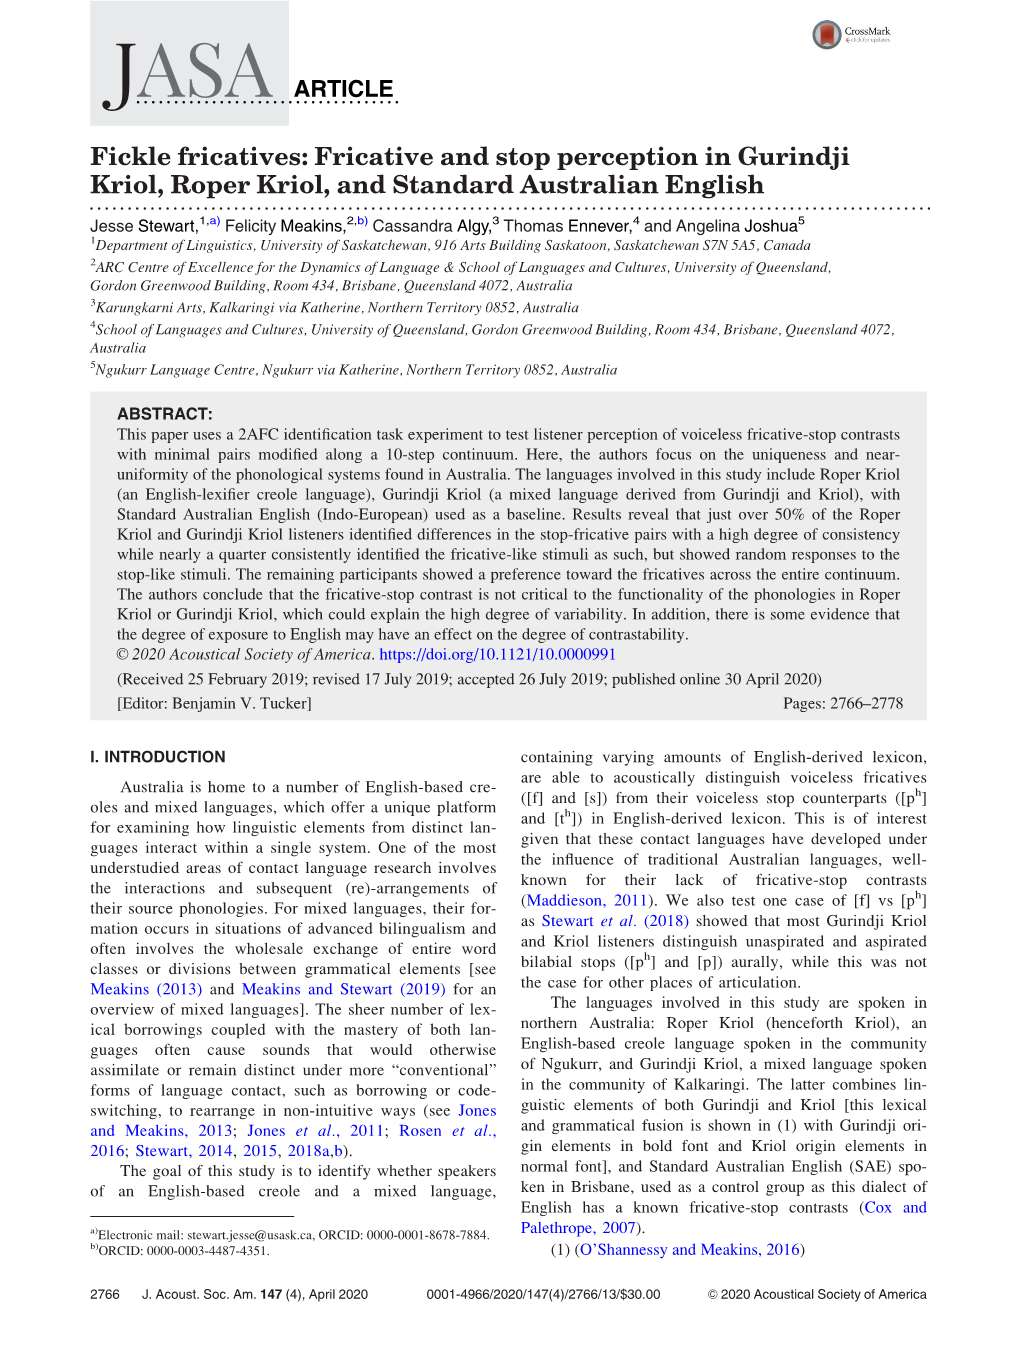 Fricative and Stop Perception in Gurindji Kriol, Roper Kriol, and Standard Australian English